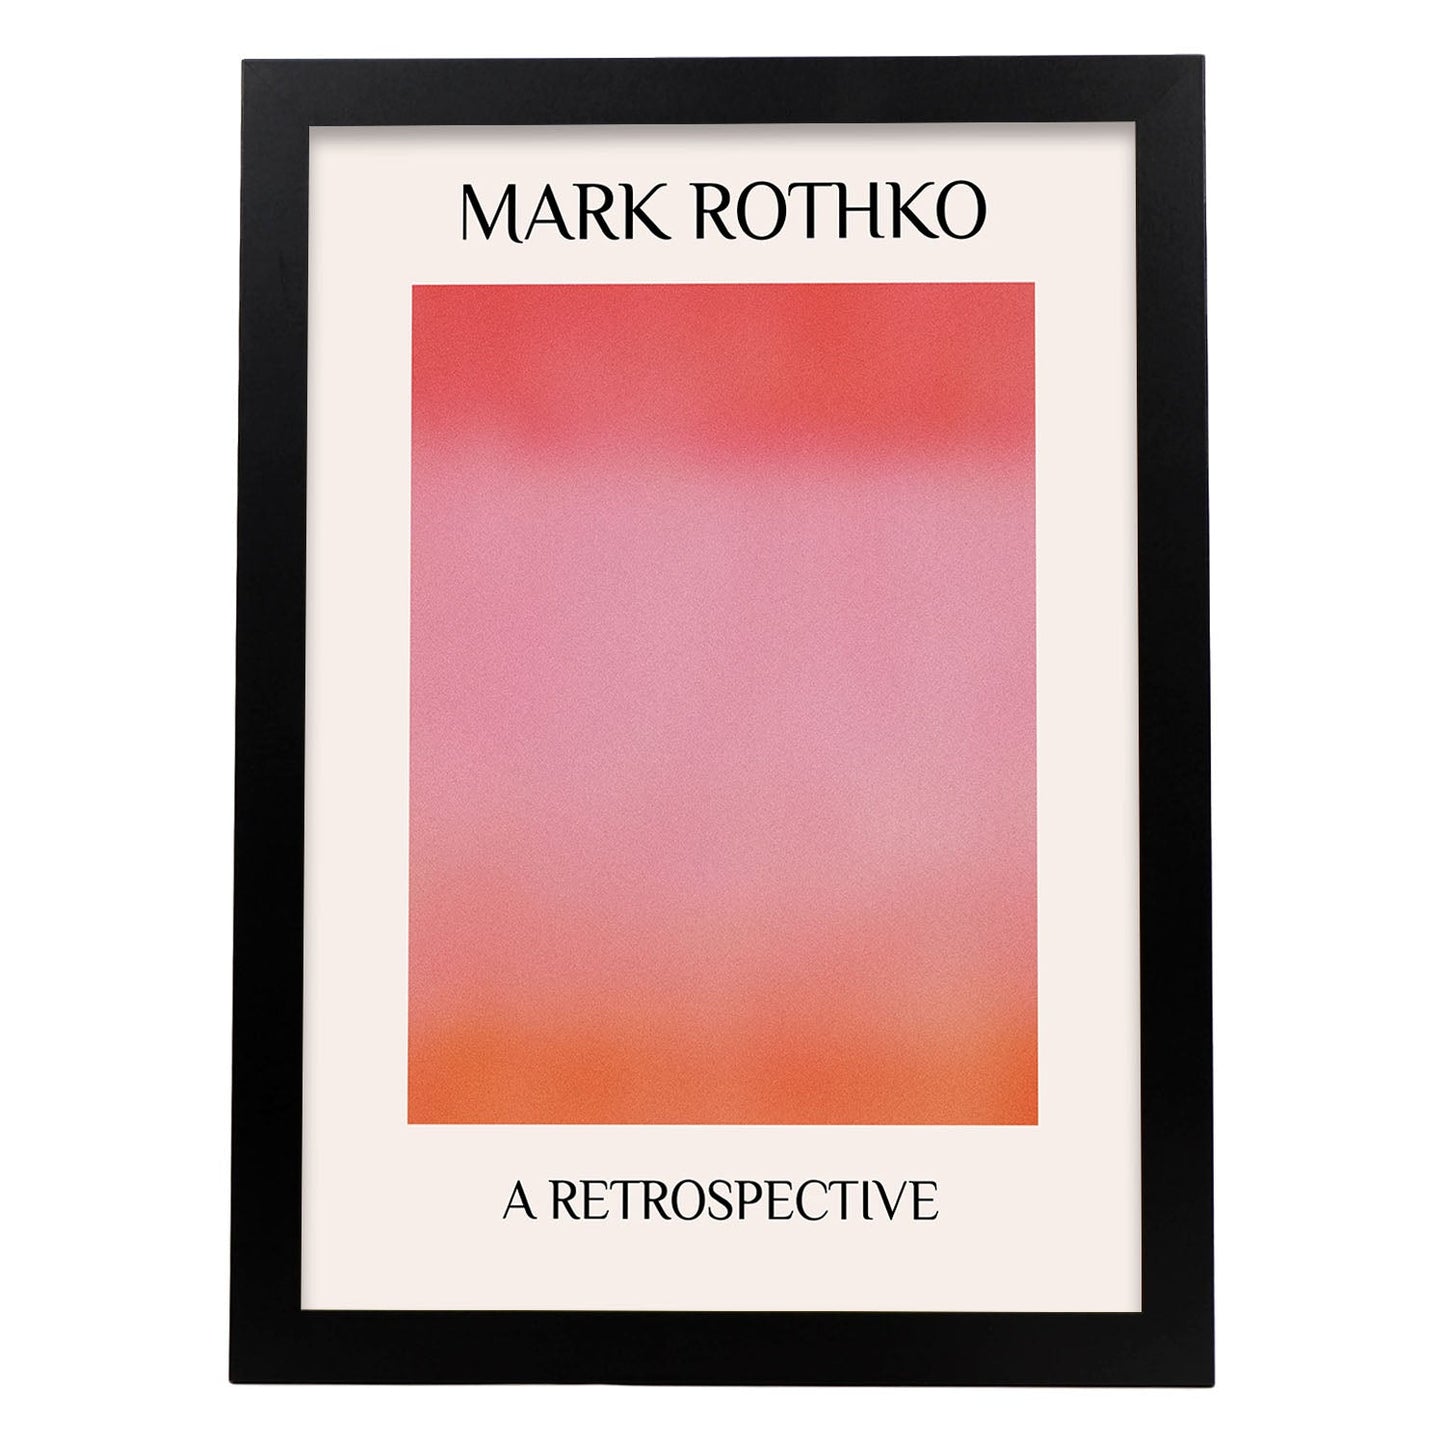 Lamina artistica decorativa con ilustración de Exposición Rothko 6 estilo expresionismo abstracto-Artwork-Nacnic-A3-Marco Negro-Nacnic Estudio SL